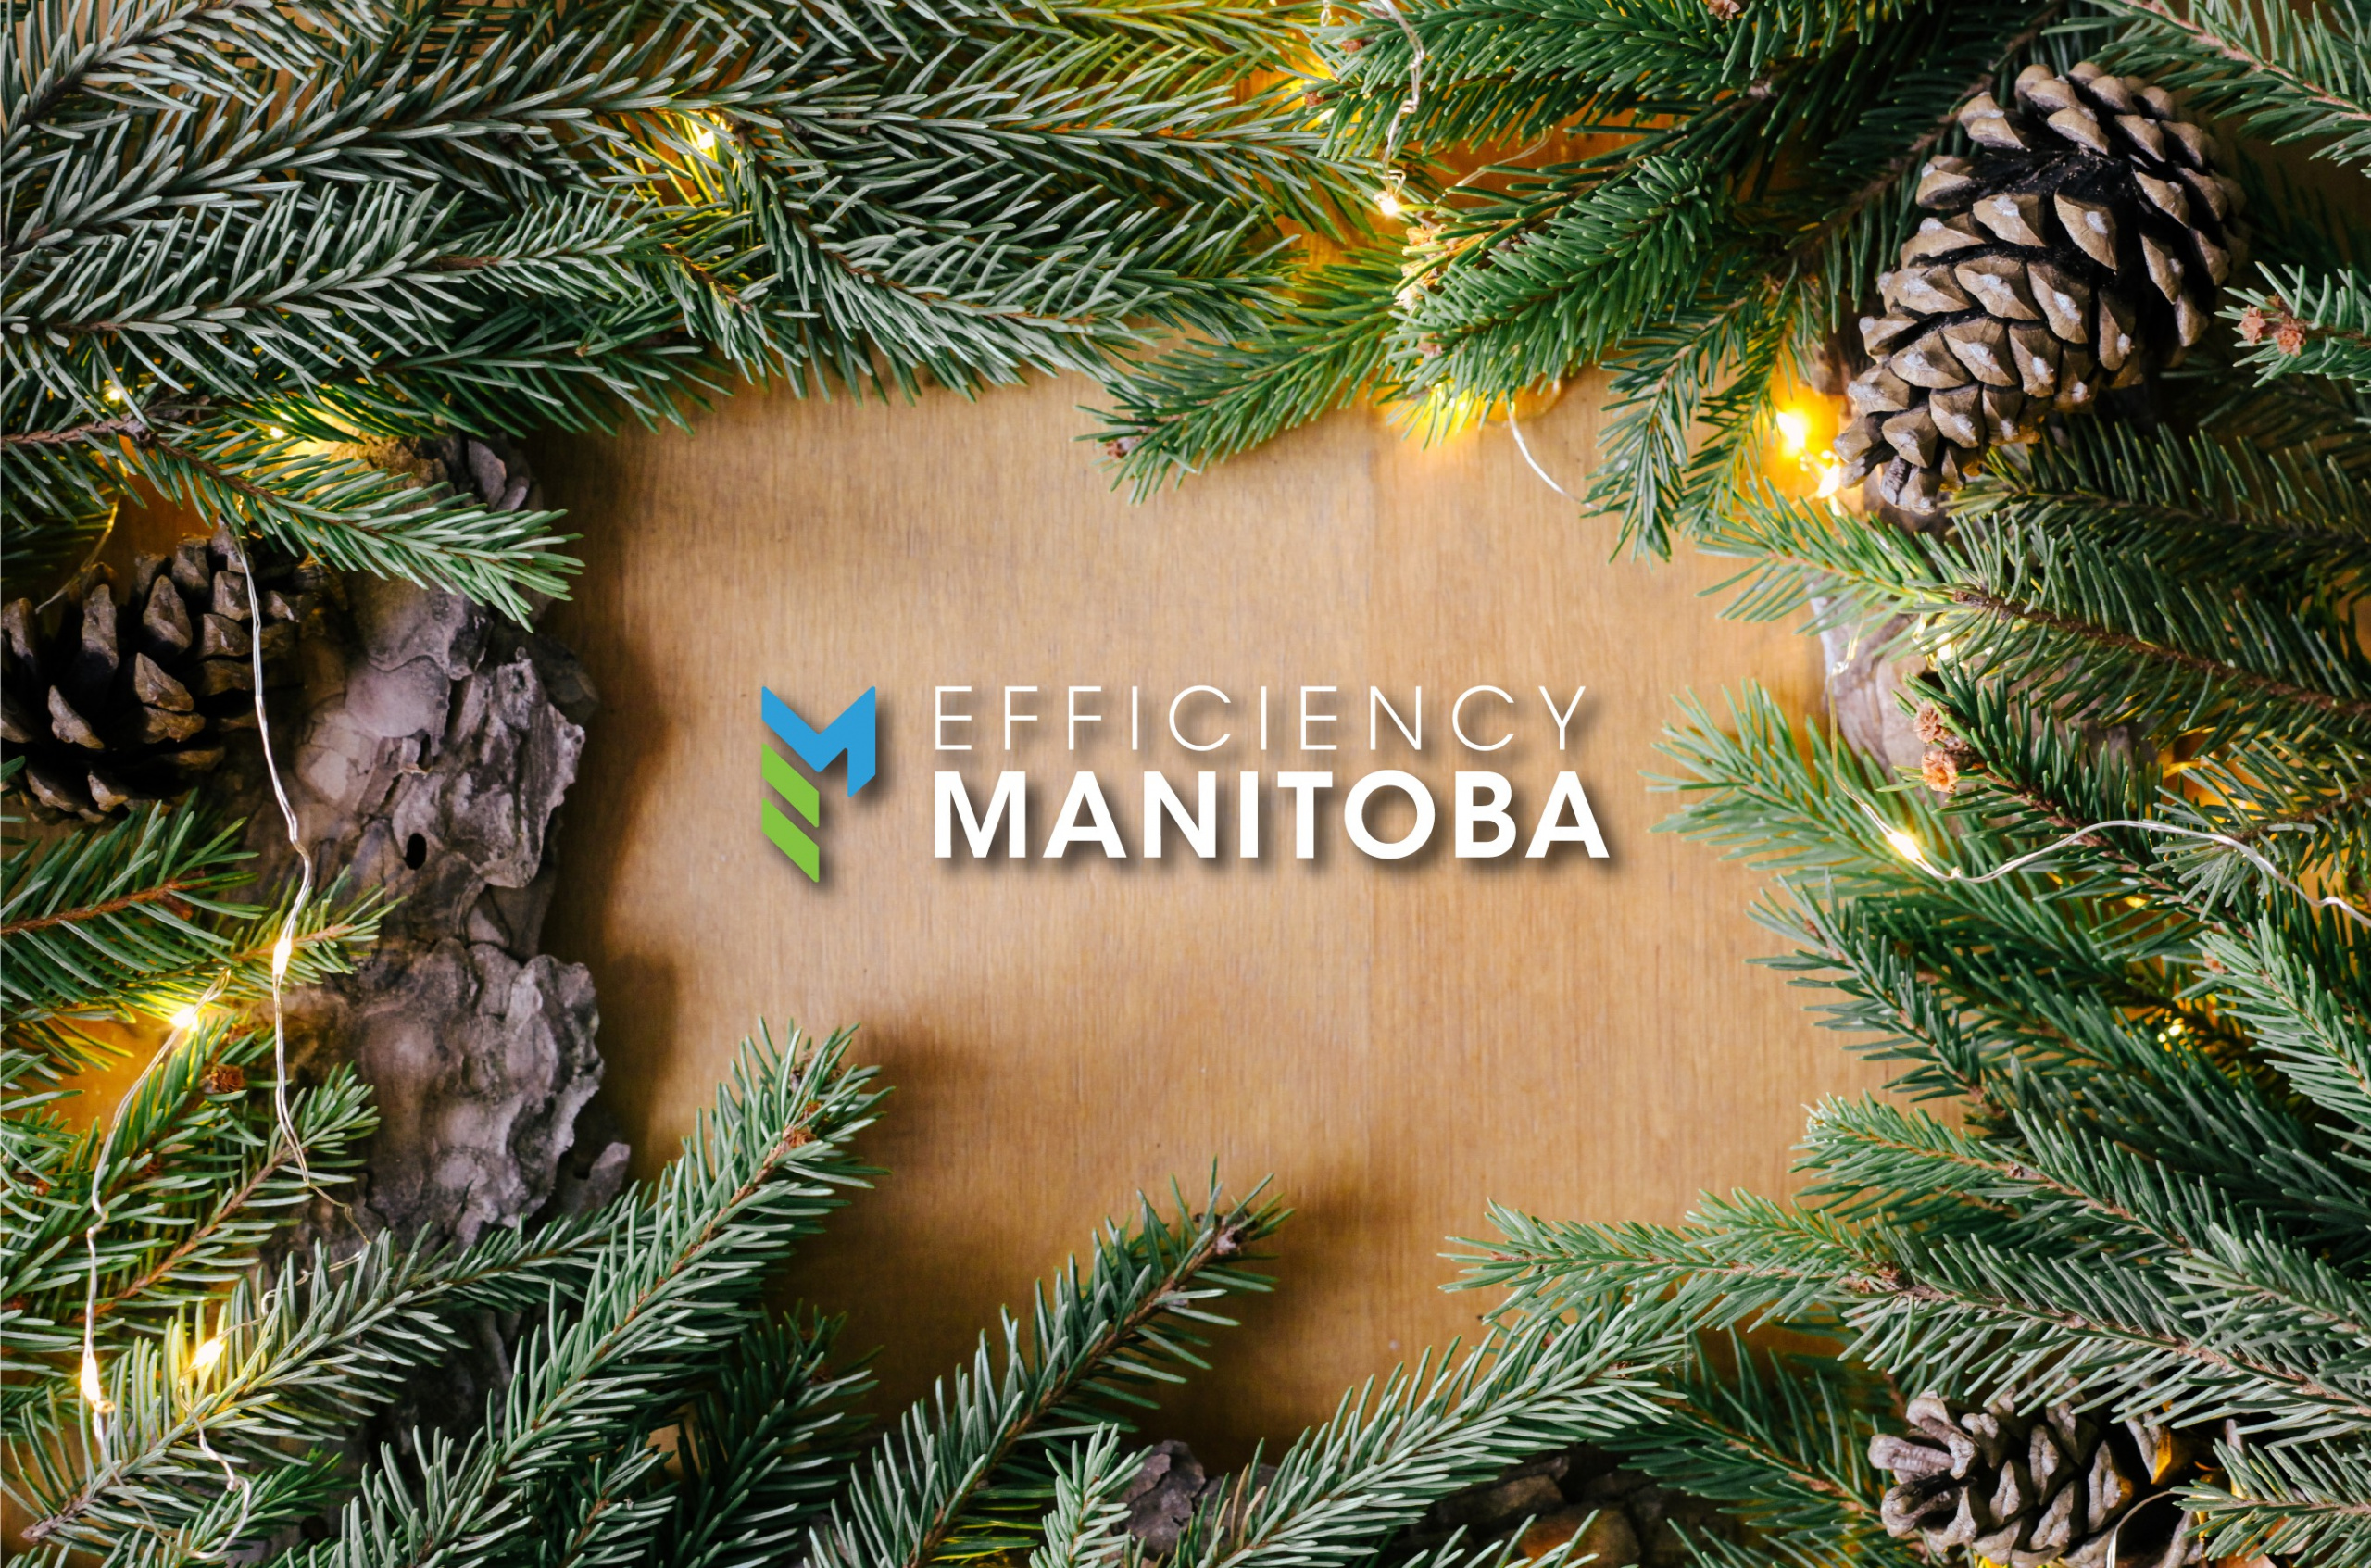 Efficiency Manitoba logo within a wreath